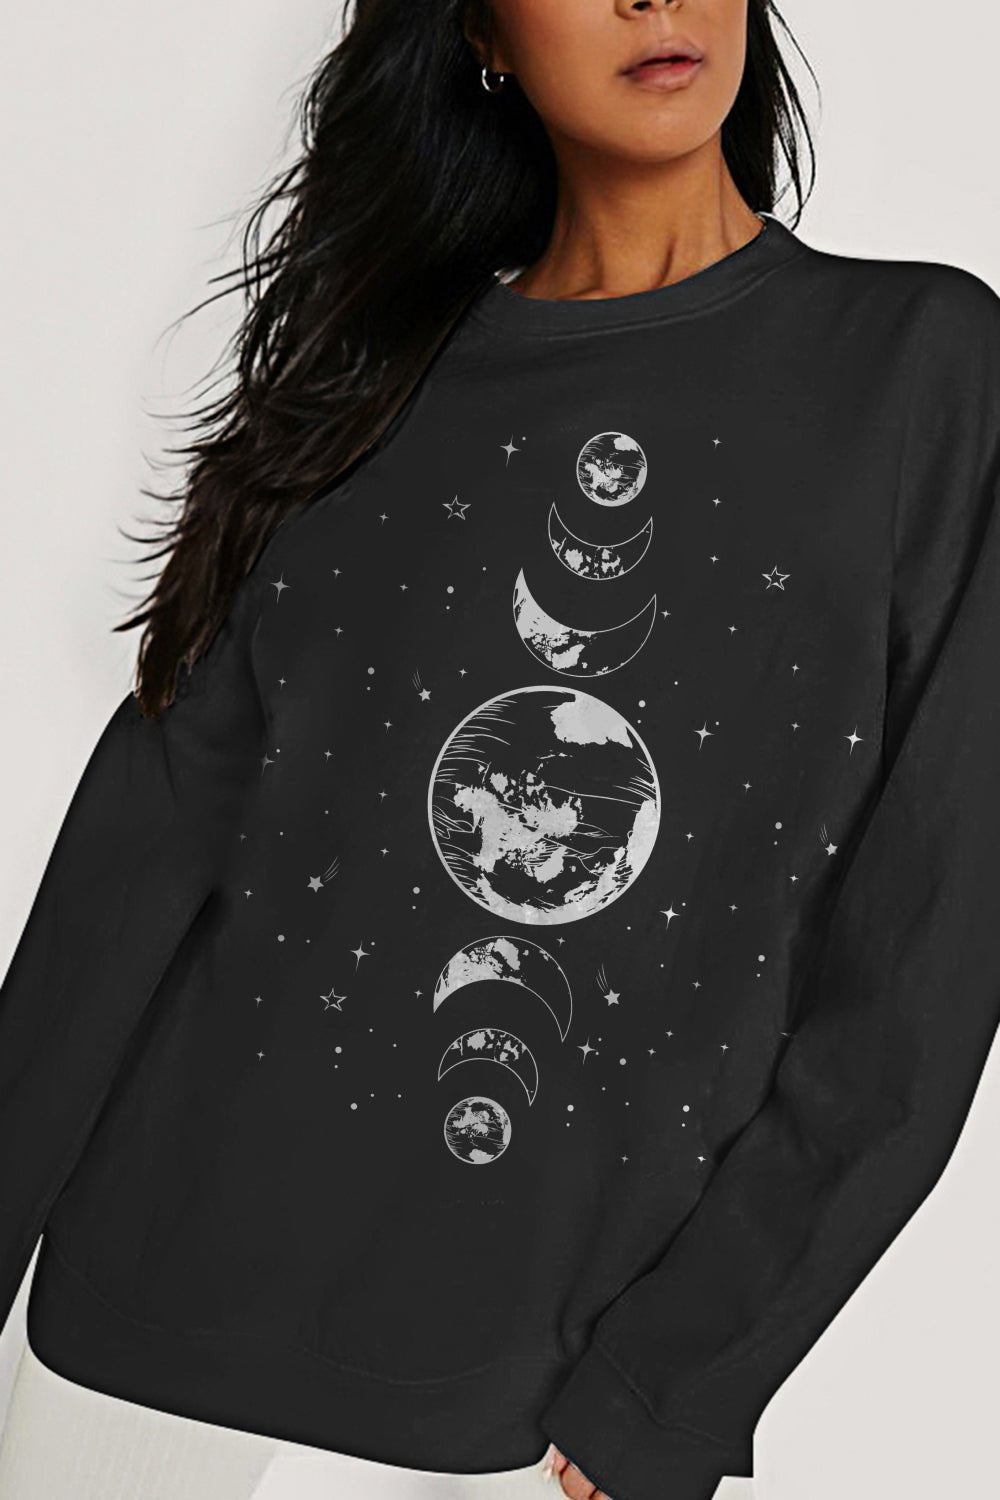 Intuition Earth & Moon Graphic Sweatshirt - Tangerine Goddess